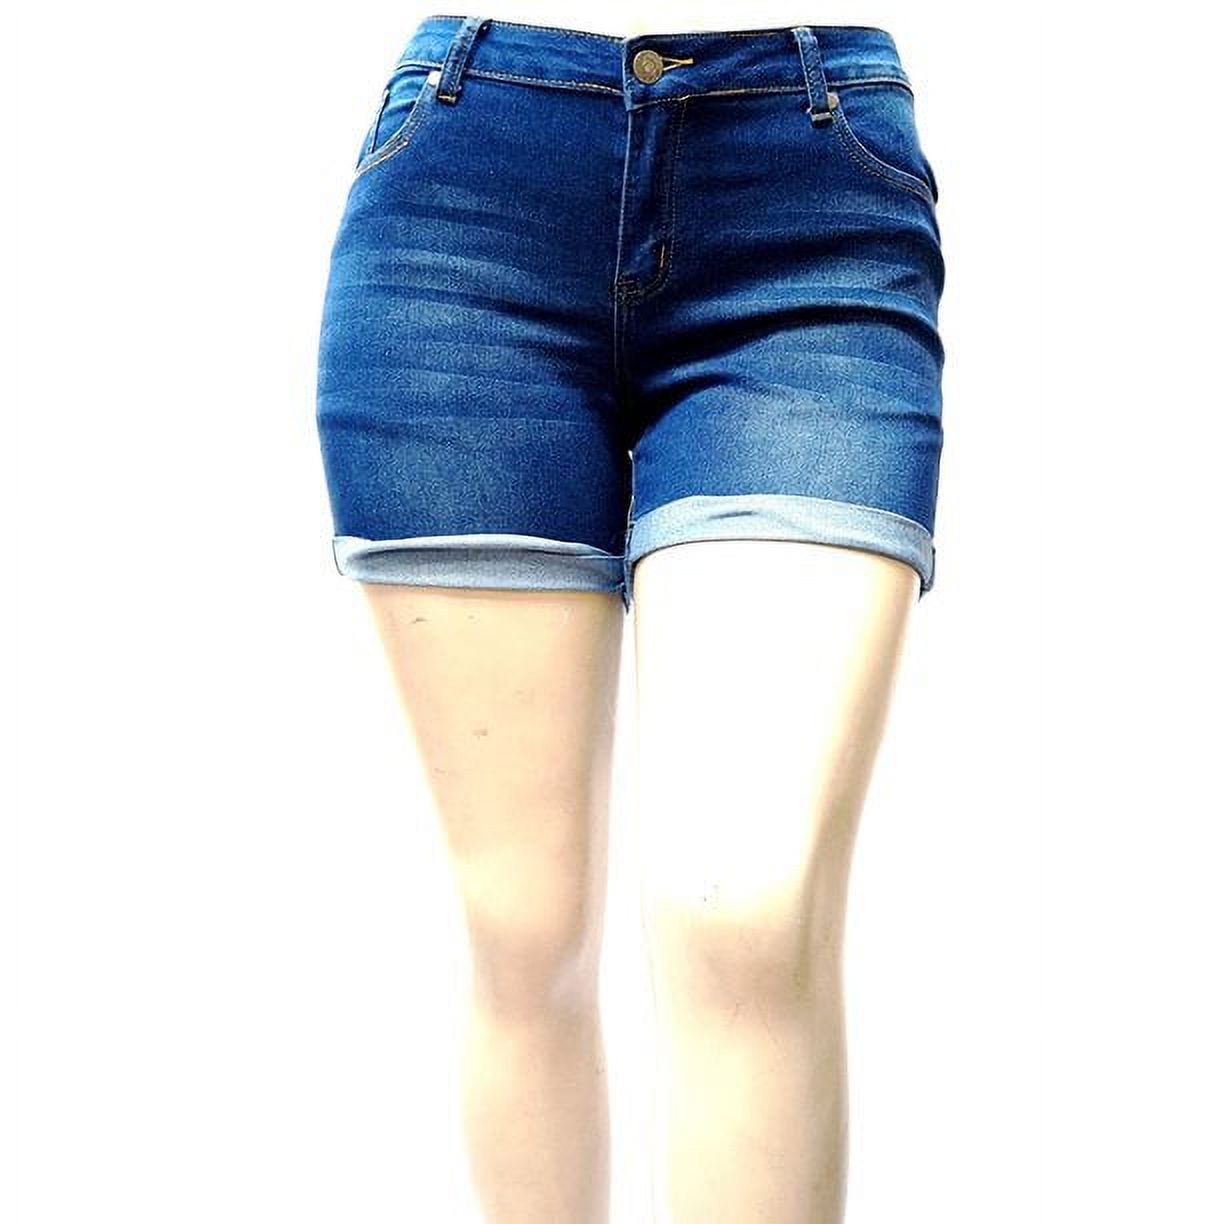 1826 Jeans Women's Plus Size Cuff Rolled Capri Bermuda Short Curvy Denim Jean - 2799 - image 1 of 3